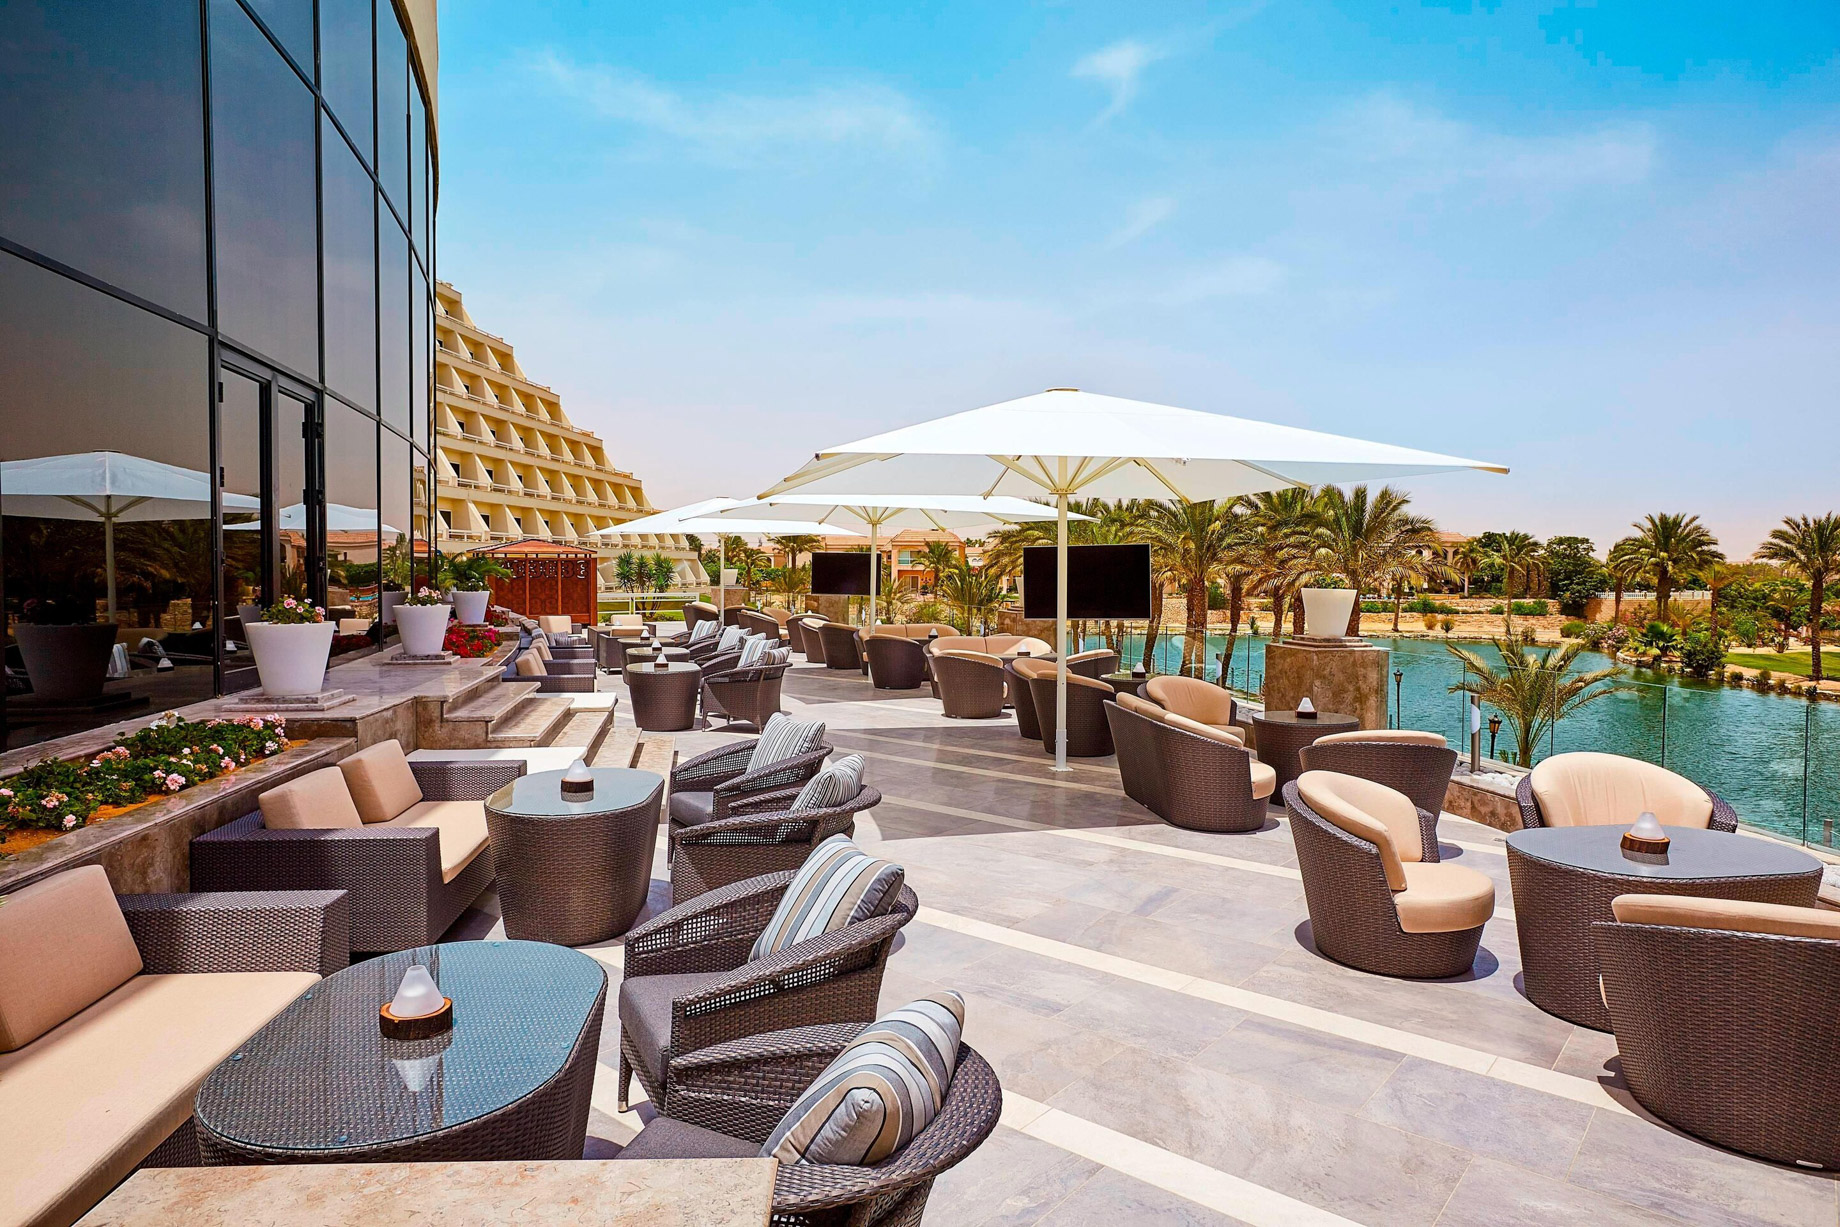 JW Marriott Hotel Cairo – Cairo, Egypt – Plateau Lounge Pool View